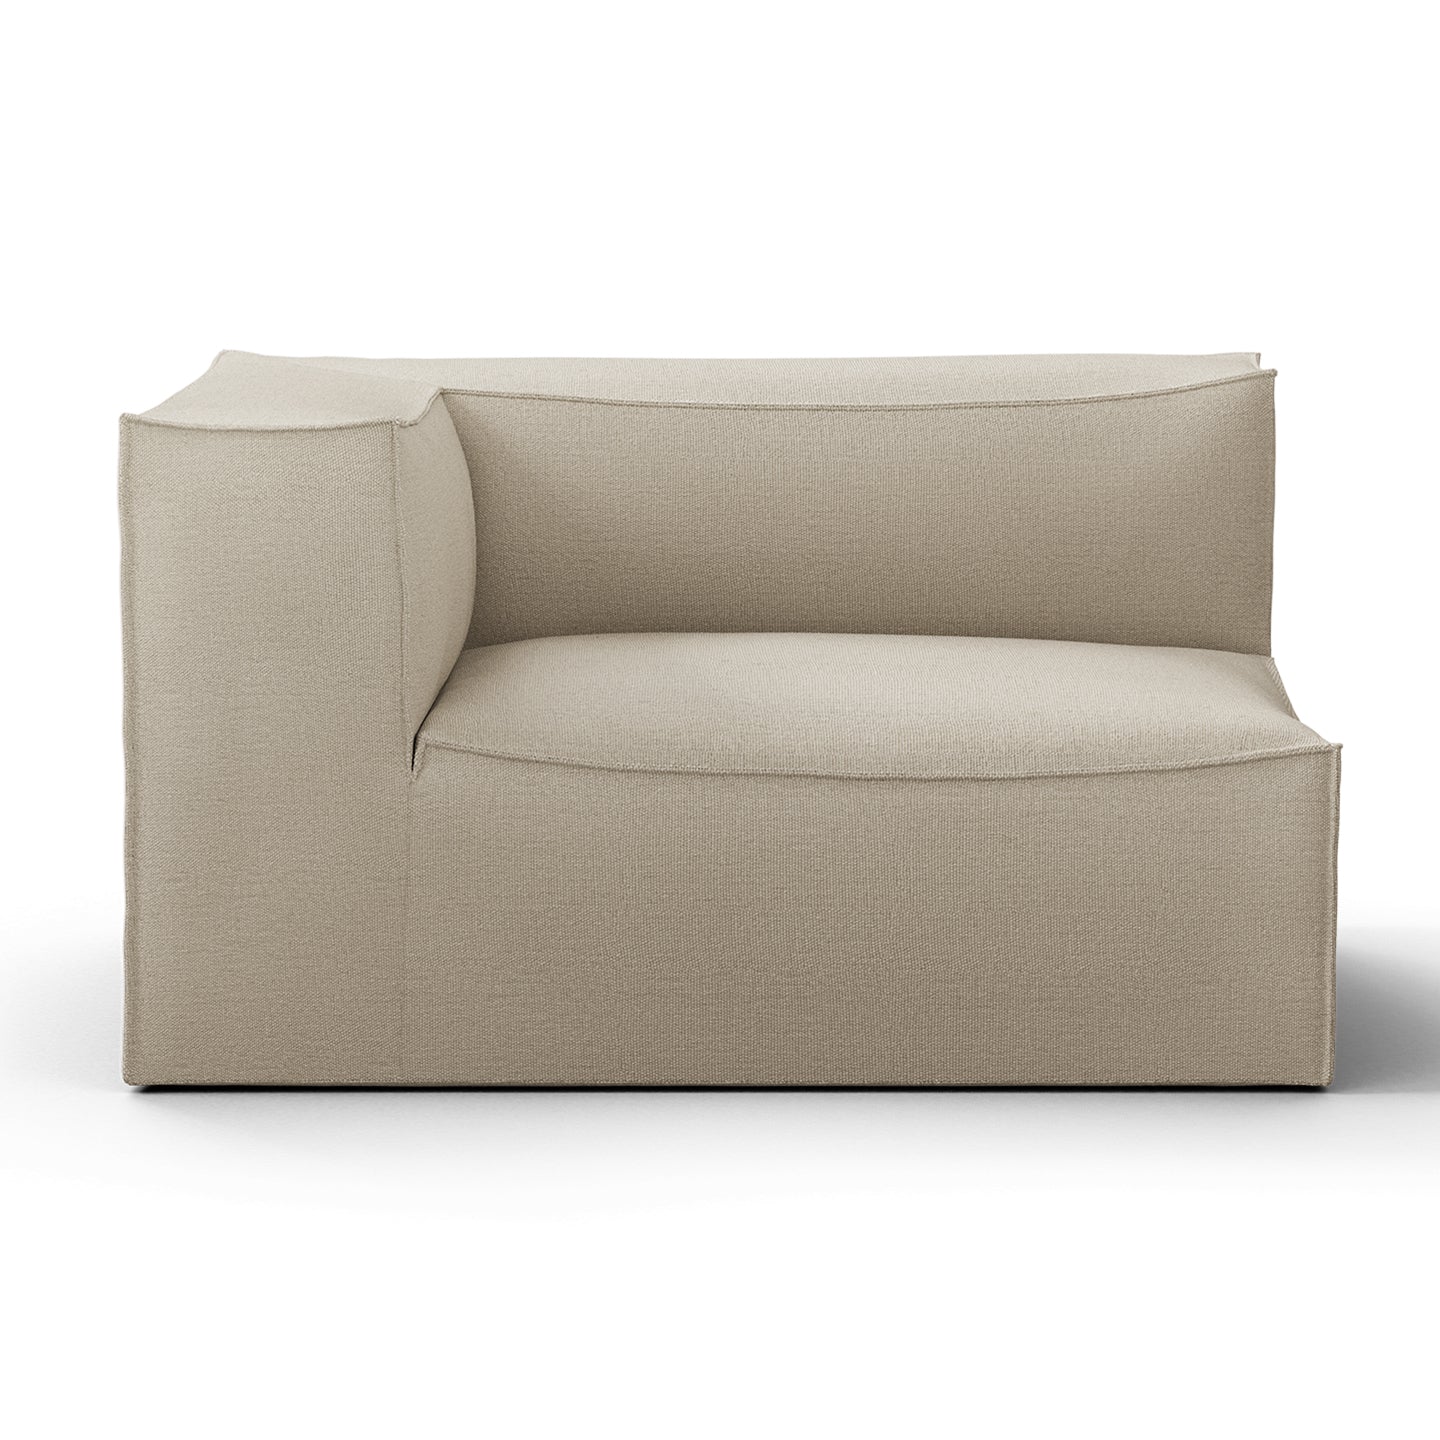 Ferm Living Catena Sofa - Large - Marz DesignsFerm Living